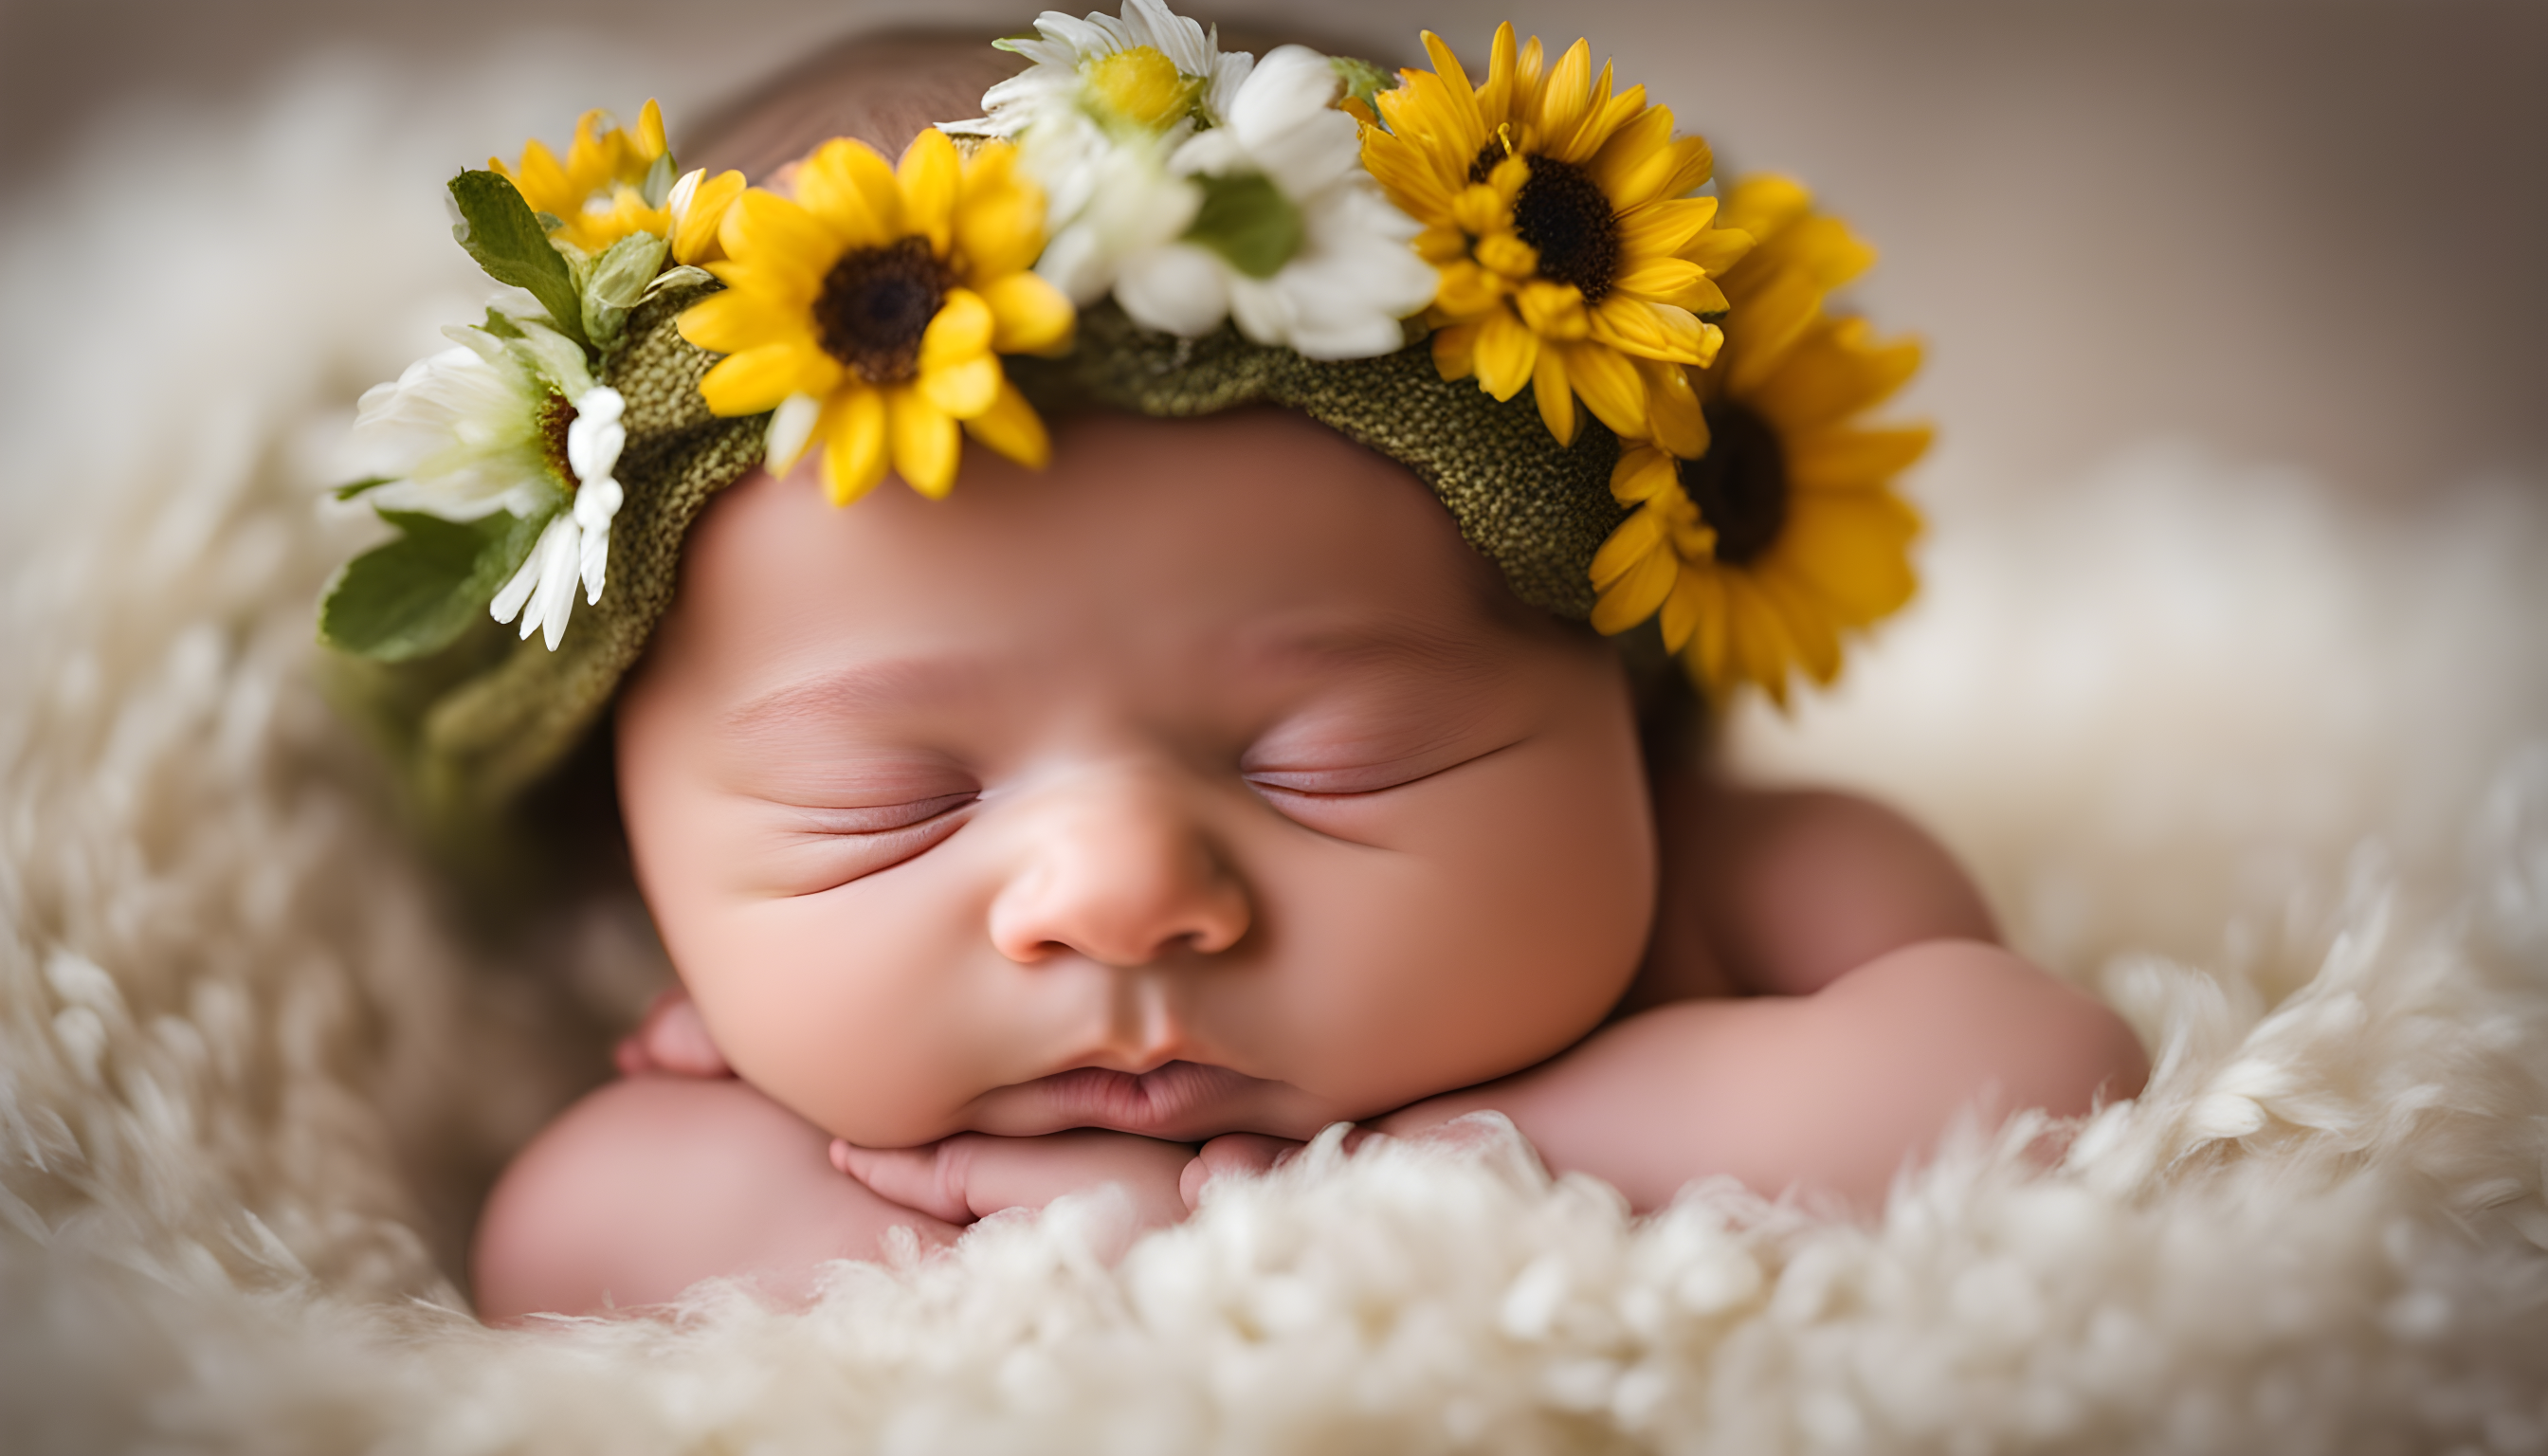 Why Do Newborn Babies Cry?